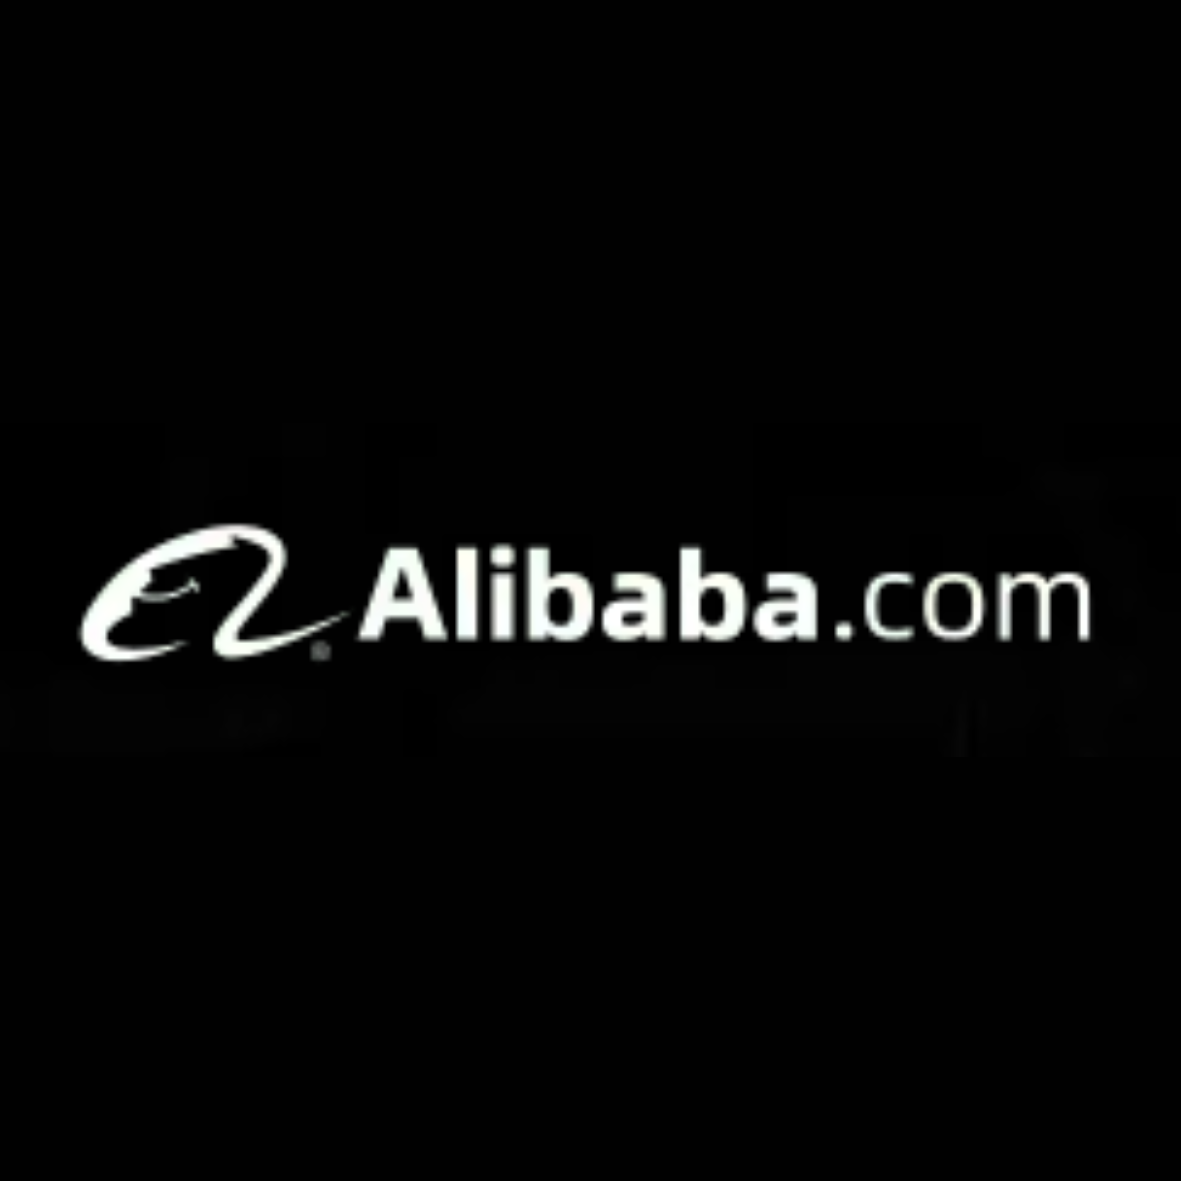 Alibaba - Manufacturing companies, Amazon Oregon Prep Center